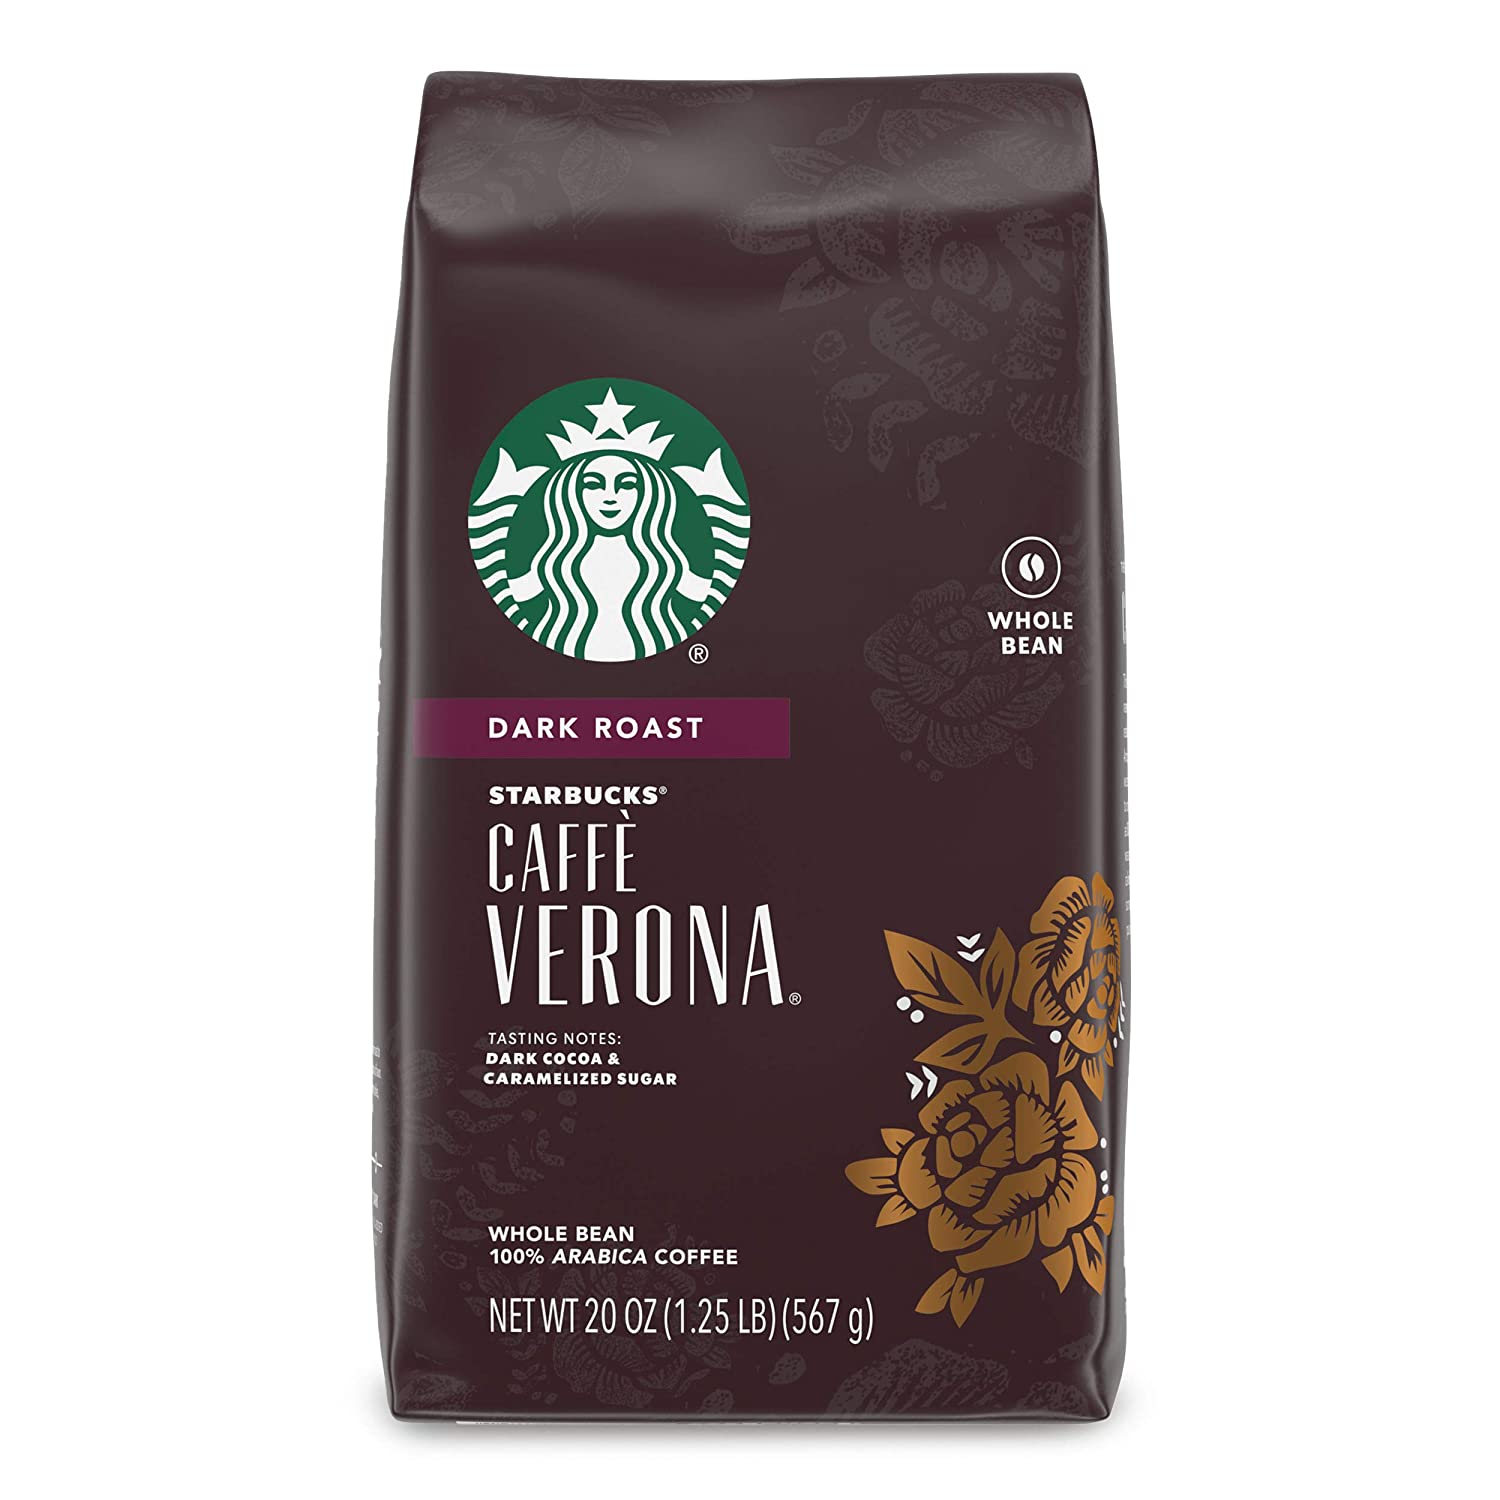 2. Starbucks Dark Roast-Caffè Verona 